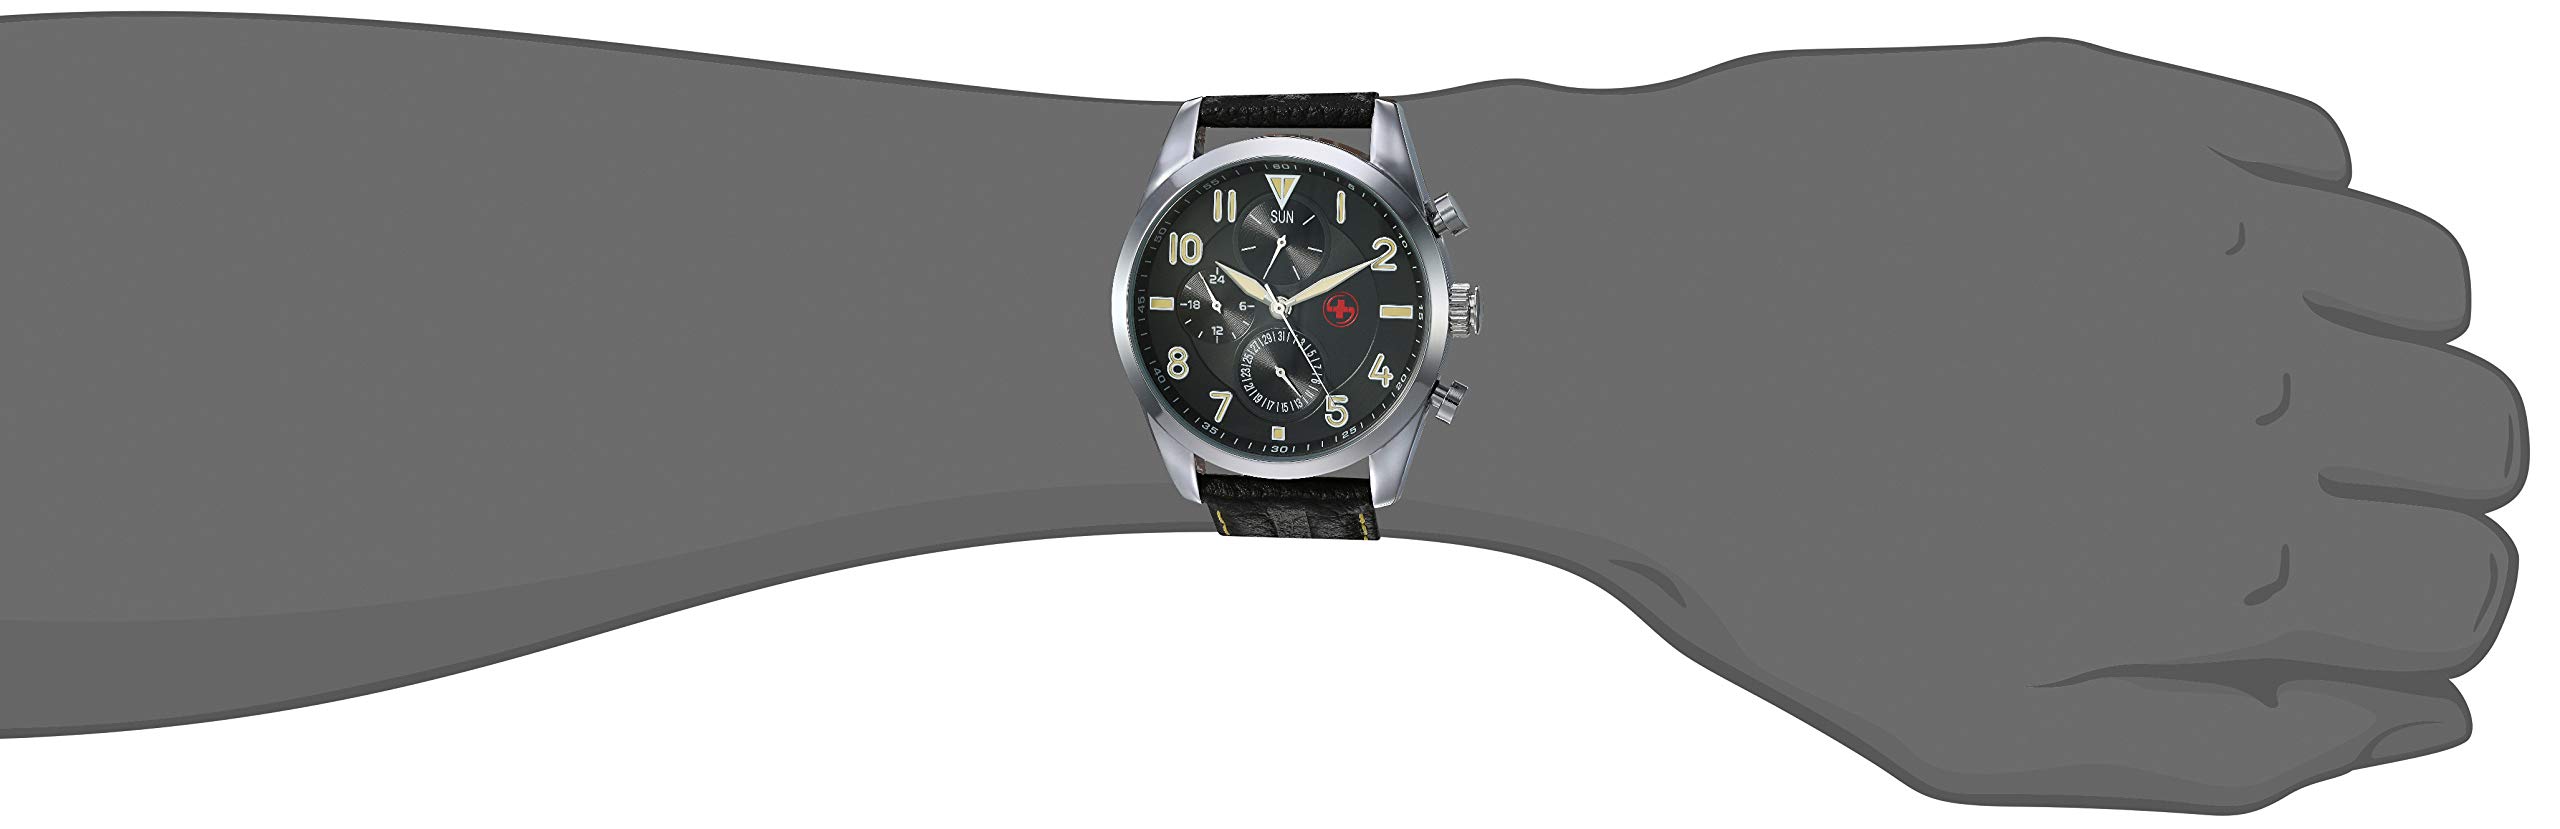 SWISSTEK Men's Red Stainless Steel Analog-Quartz Watch with Leather Strap, Black, 22 (Model: SKRD1801SPLB)